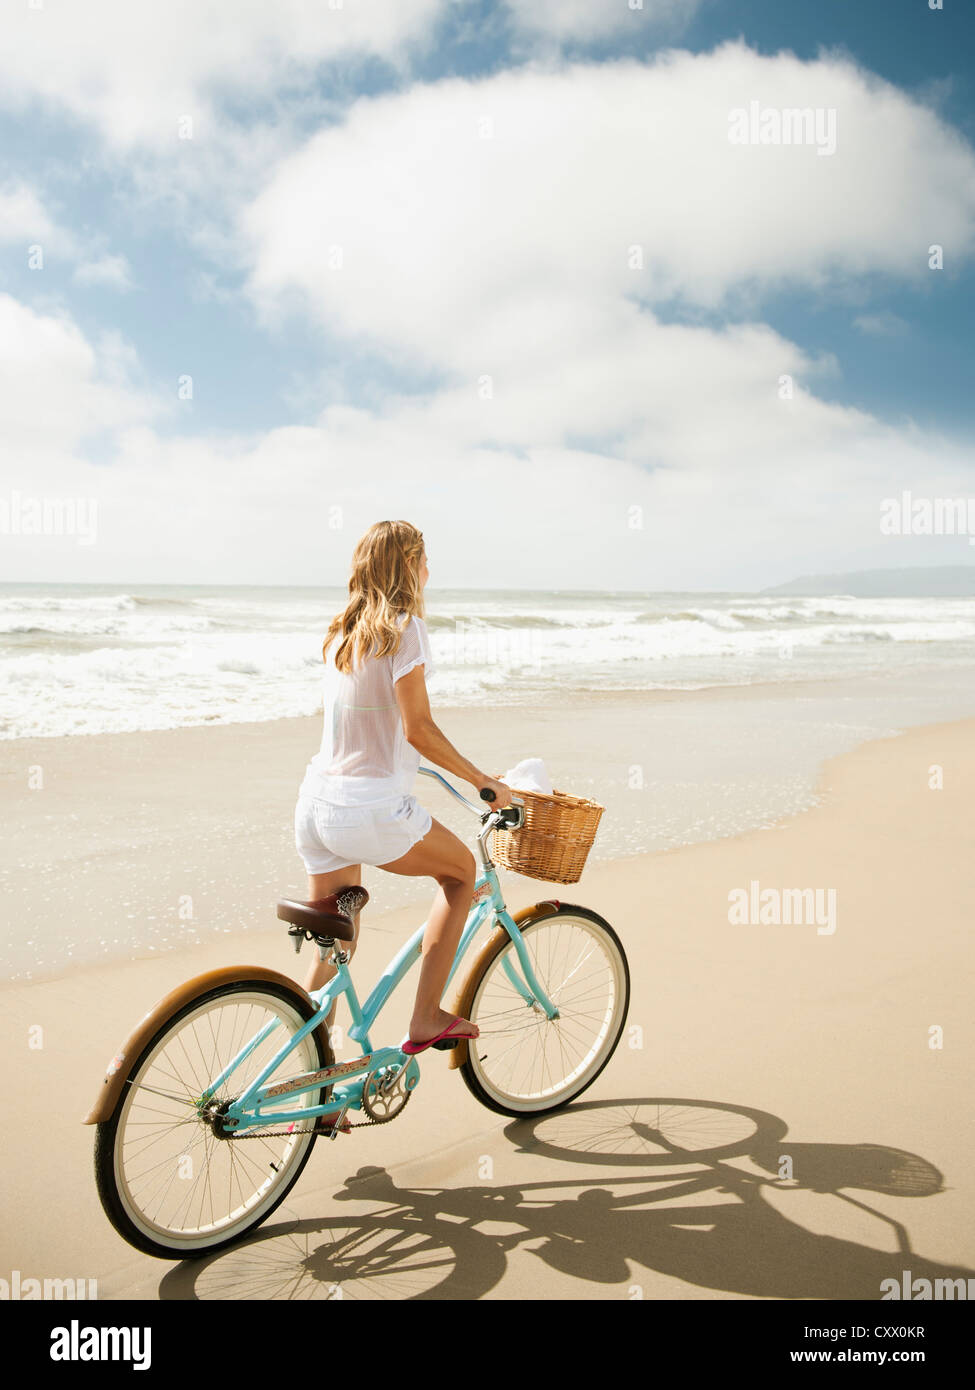 Caucasian woman riding bicycle on beach Stock Photo